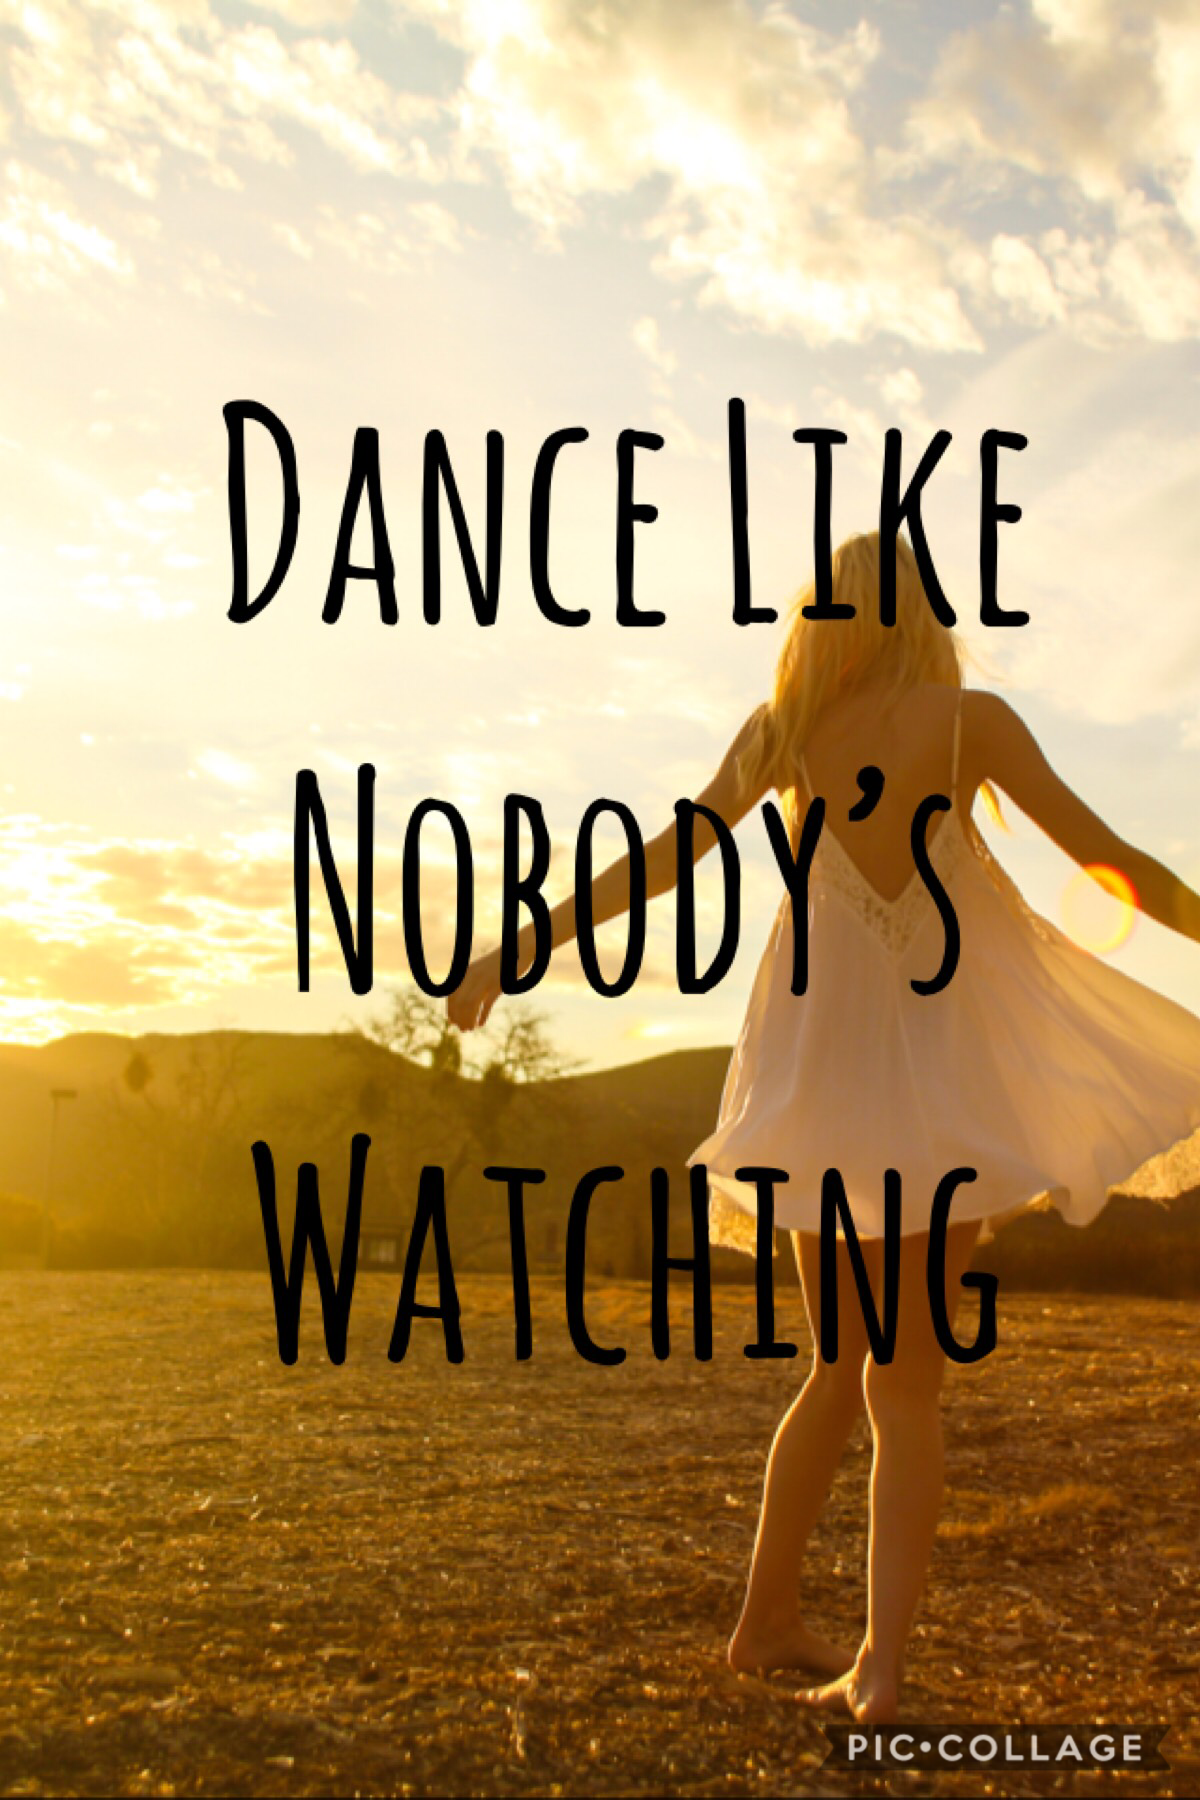 #dance👌🏼
Dance like nobody’s watching